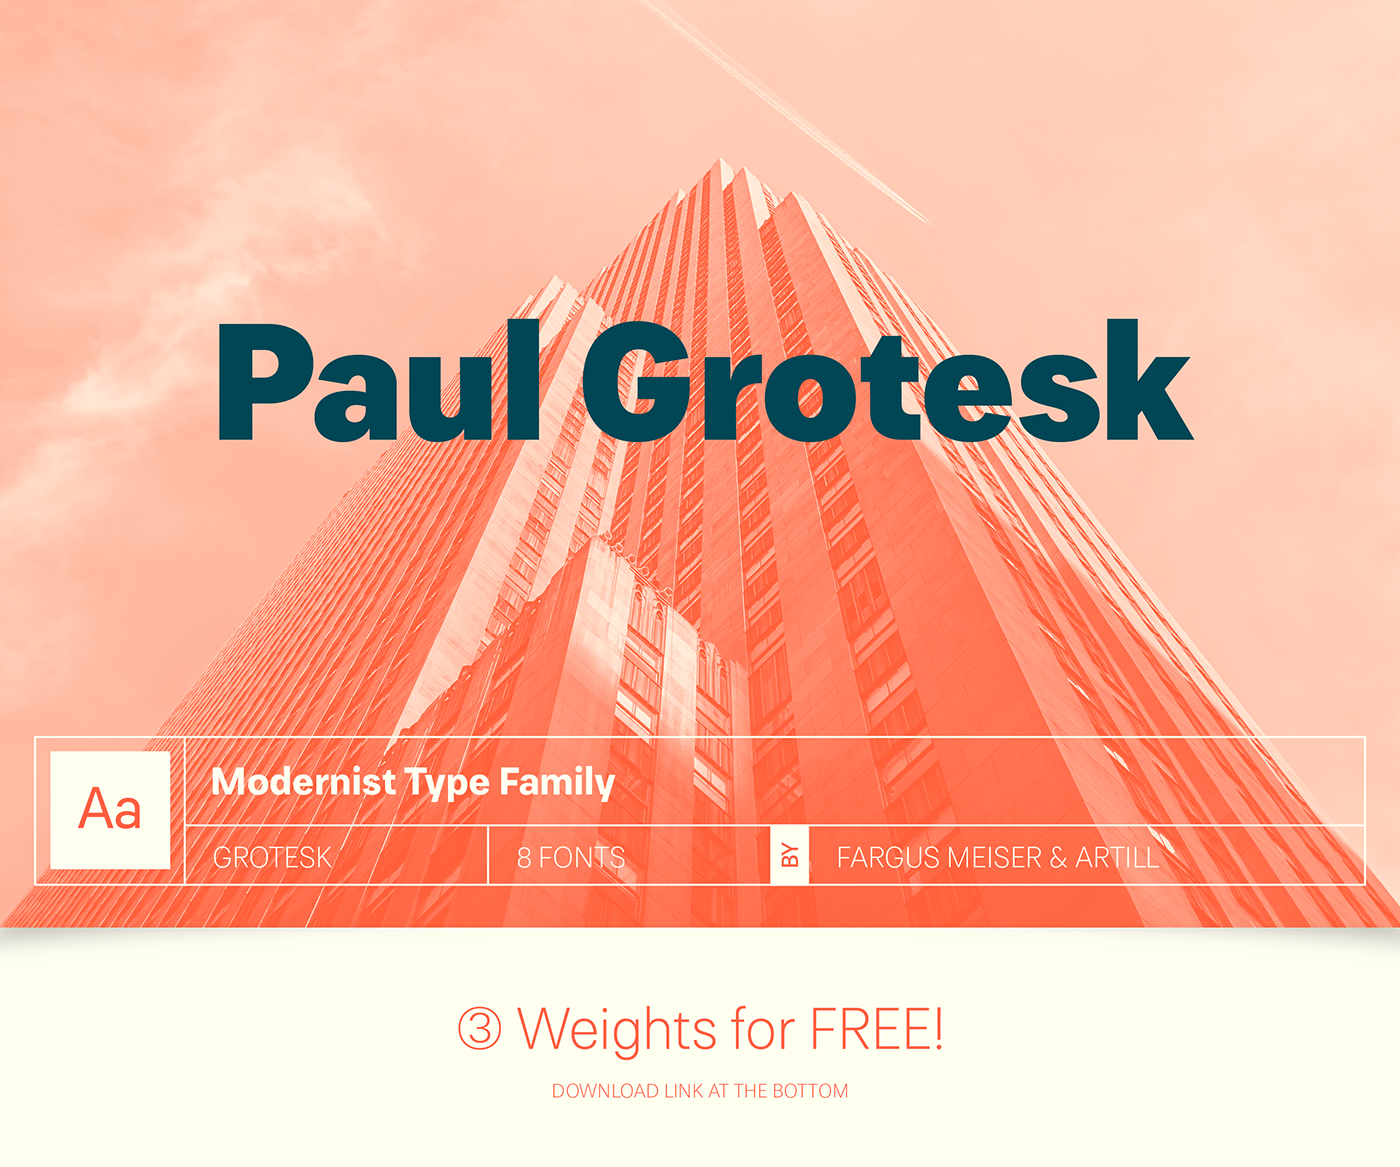 Paul Grotesk